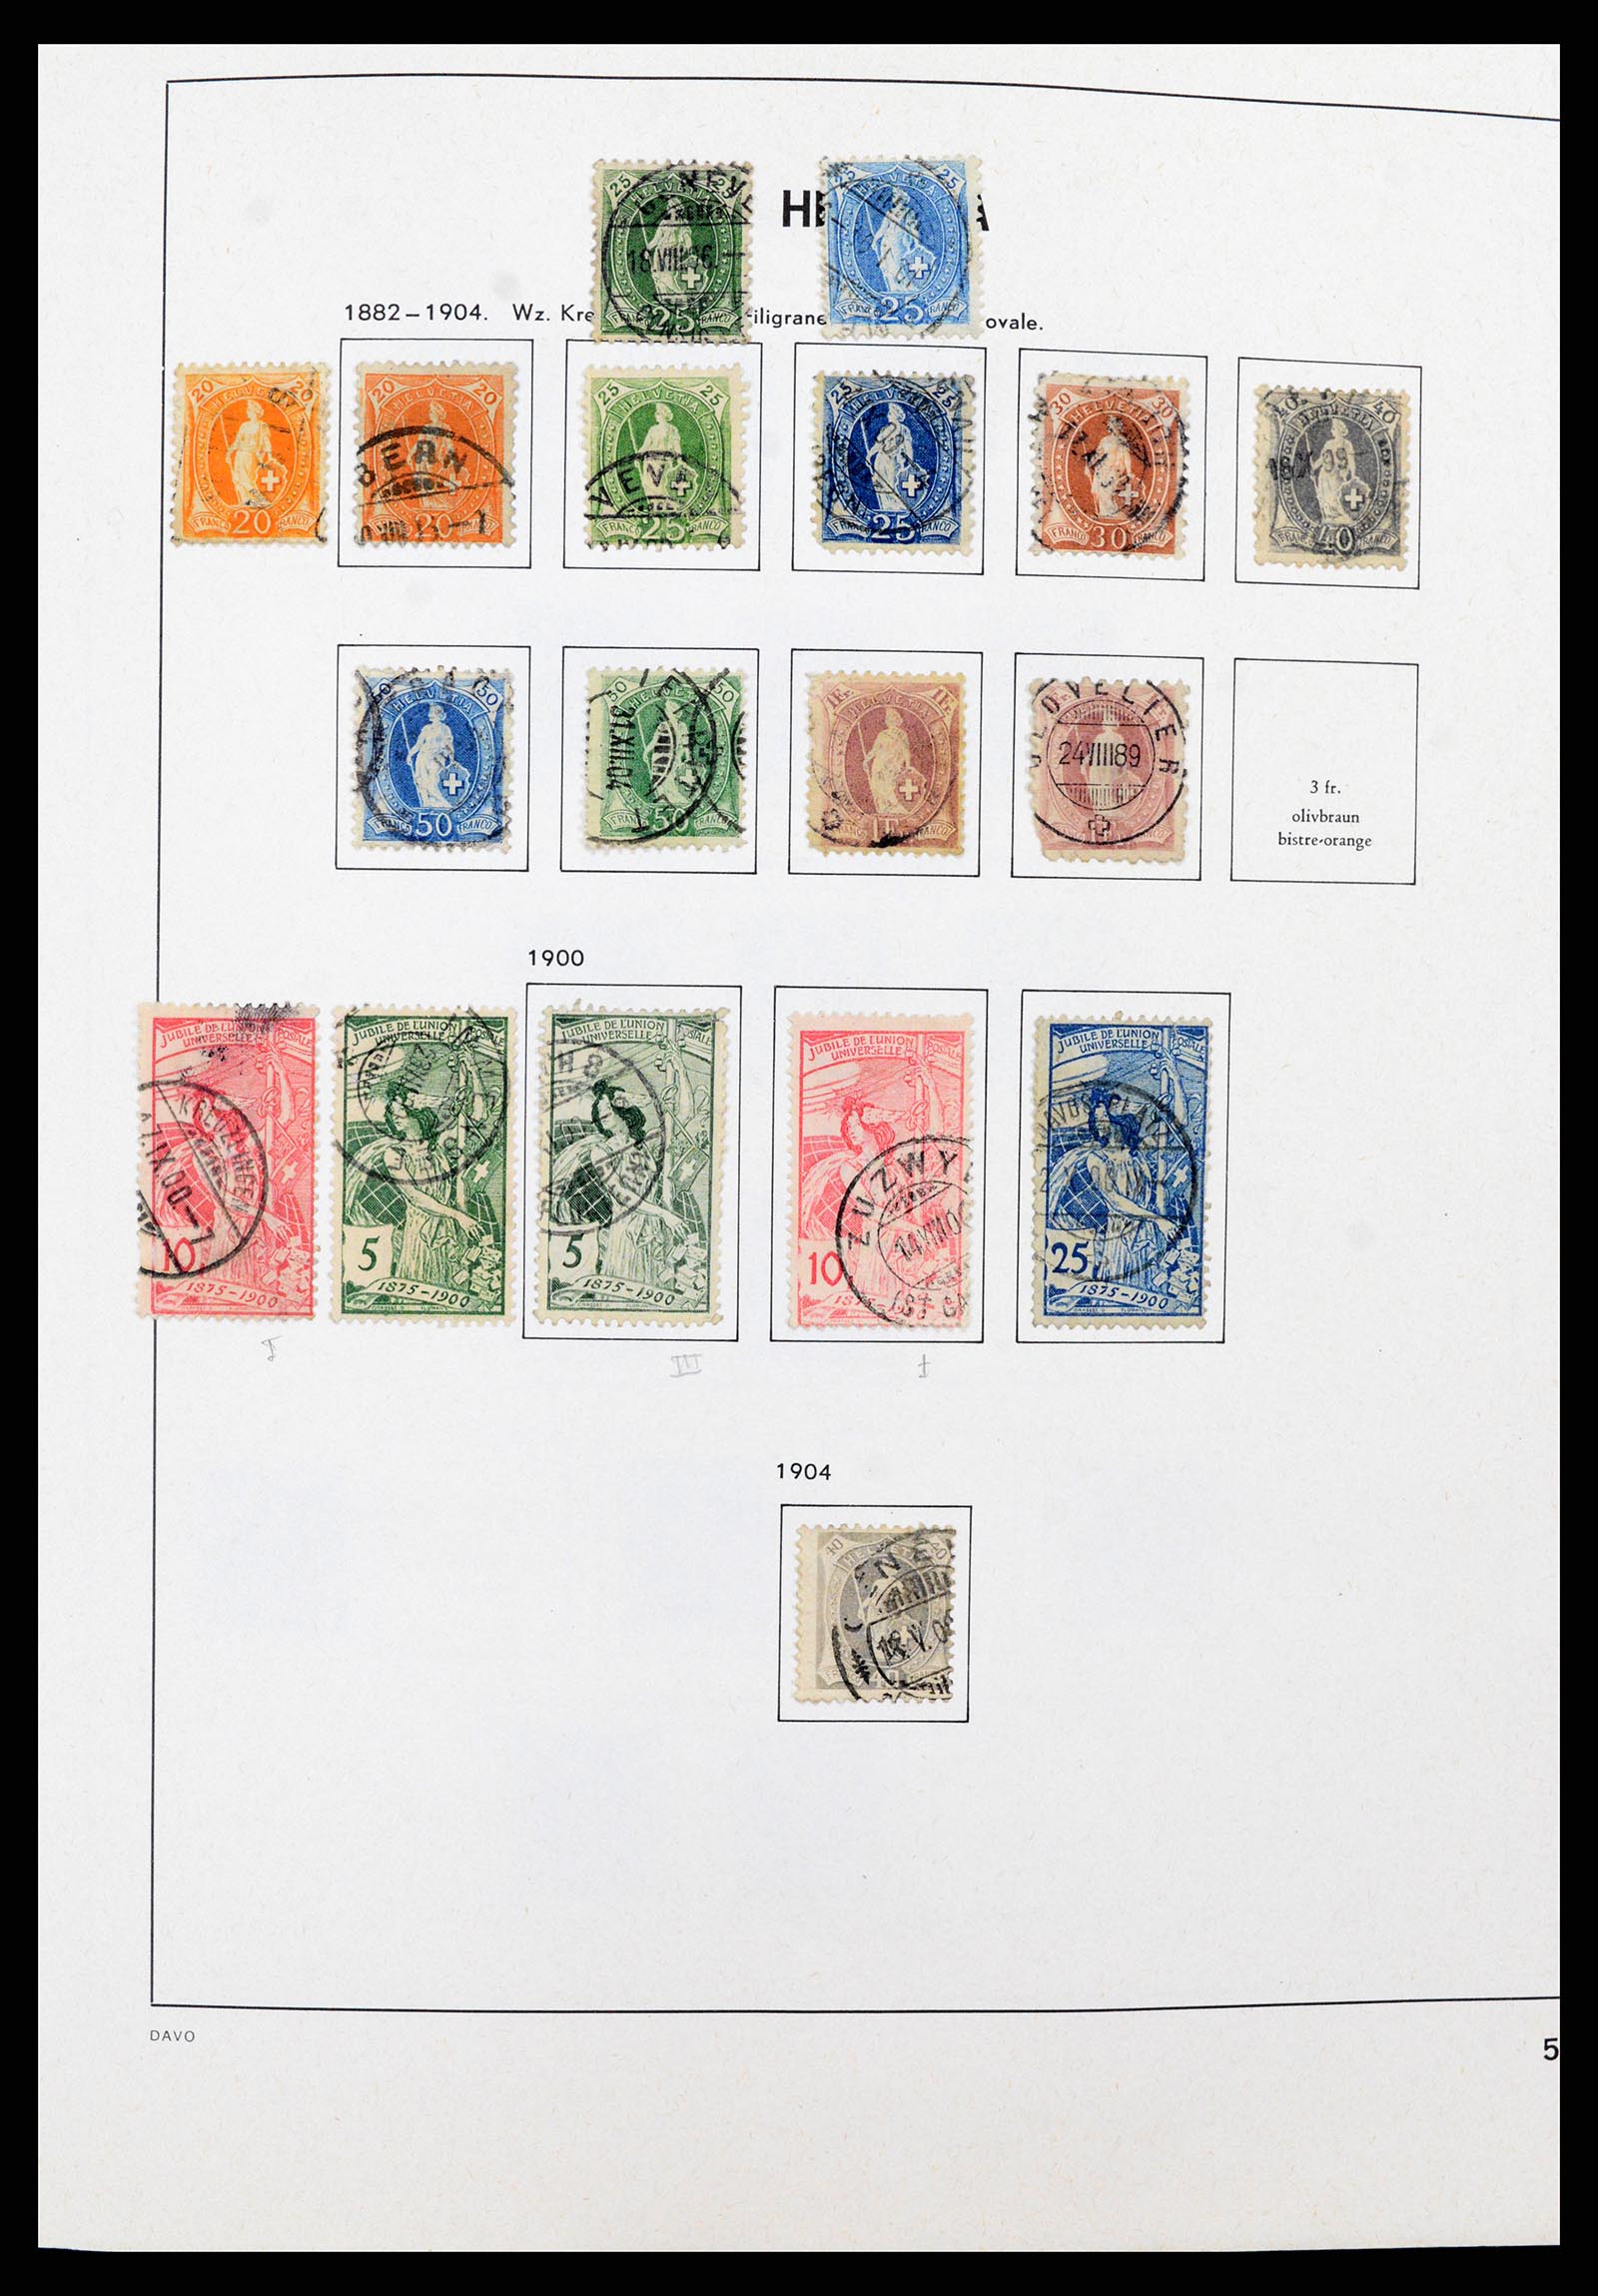 37496 004 - Stamp collection 37496 Switzerland 1854-2002.